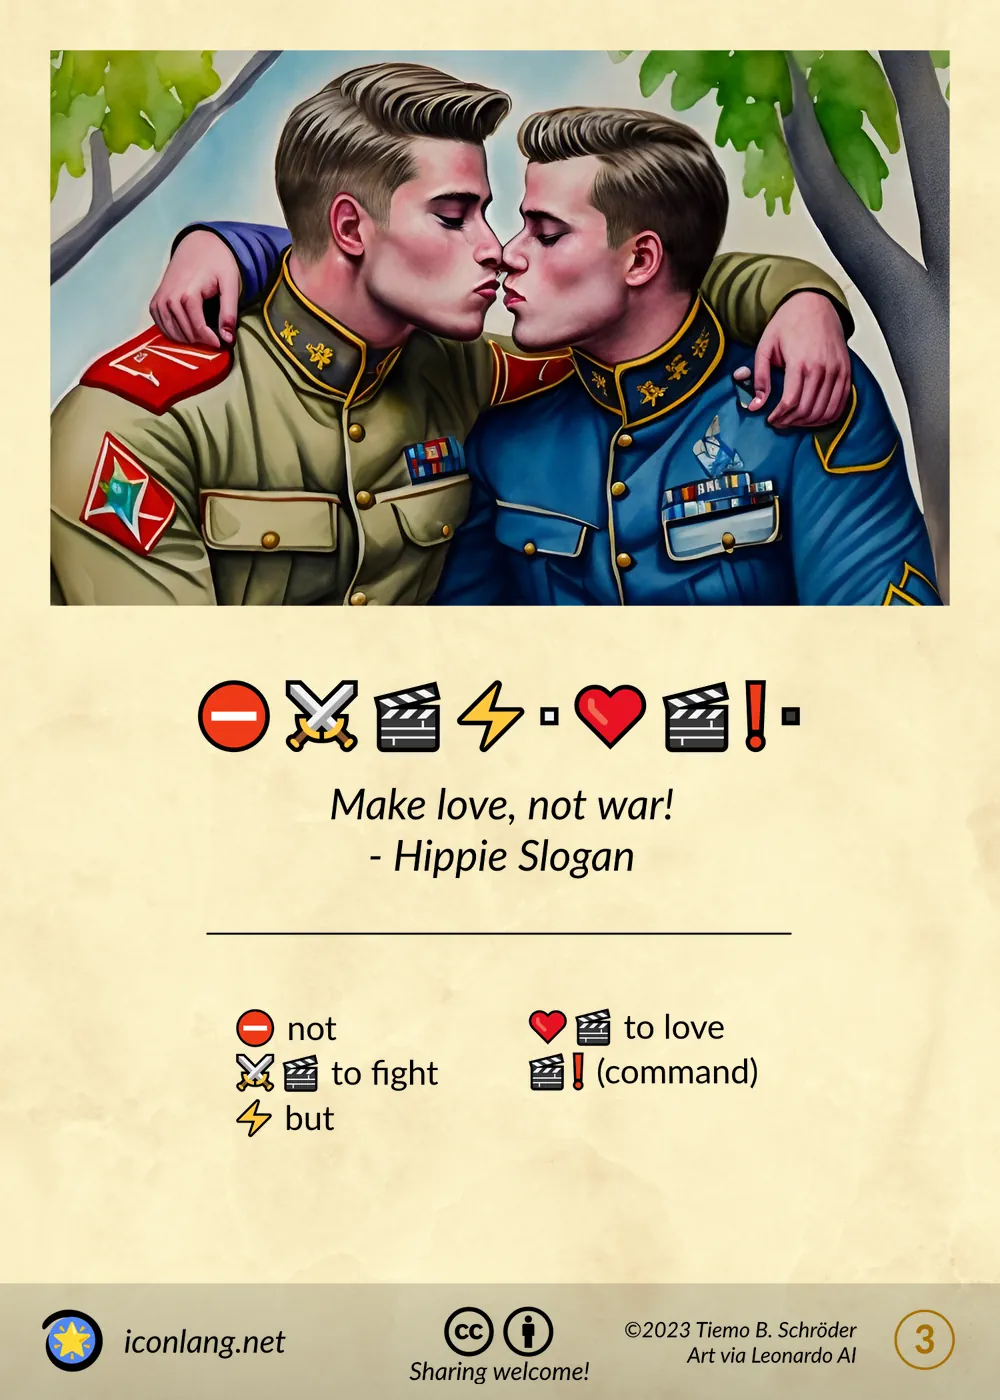 Card: Make love, not war! - Hippie Slogan